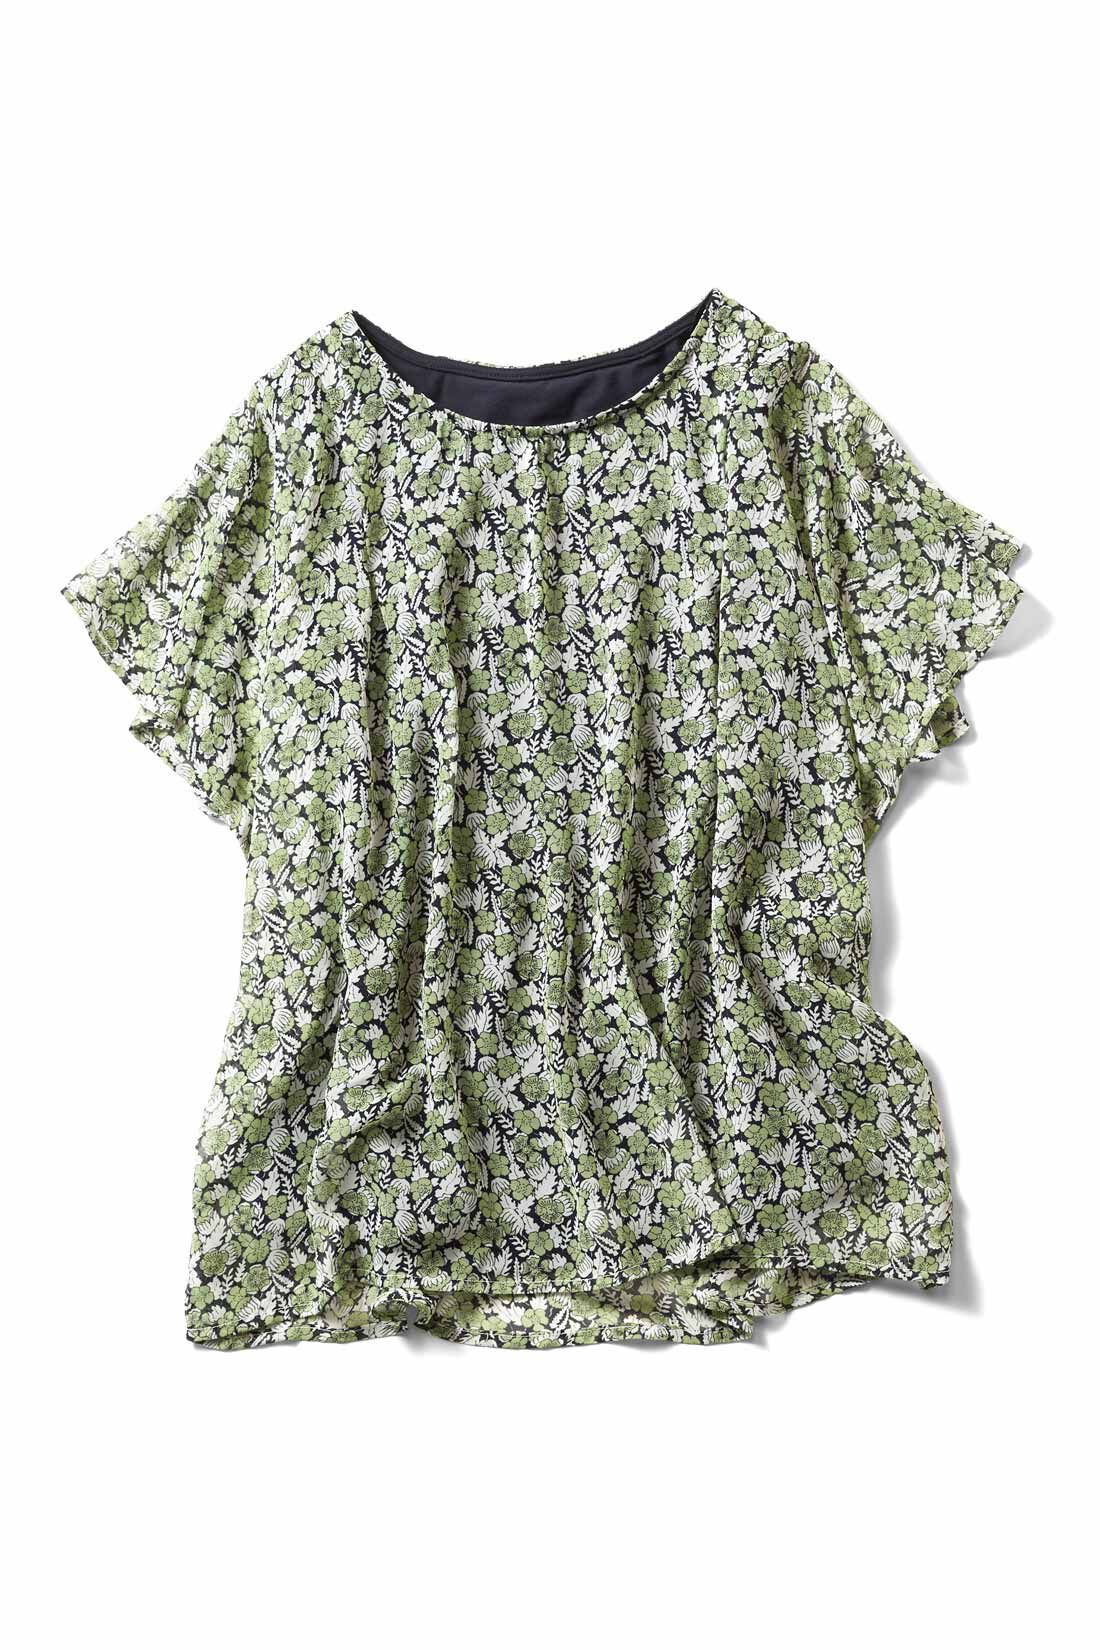 Real Stock|リブ イン コンフォート　Tシャツ感覚で着られる ひらり花柄シフォントップス〈グリーン×ネイビー〉